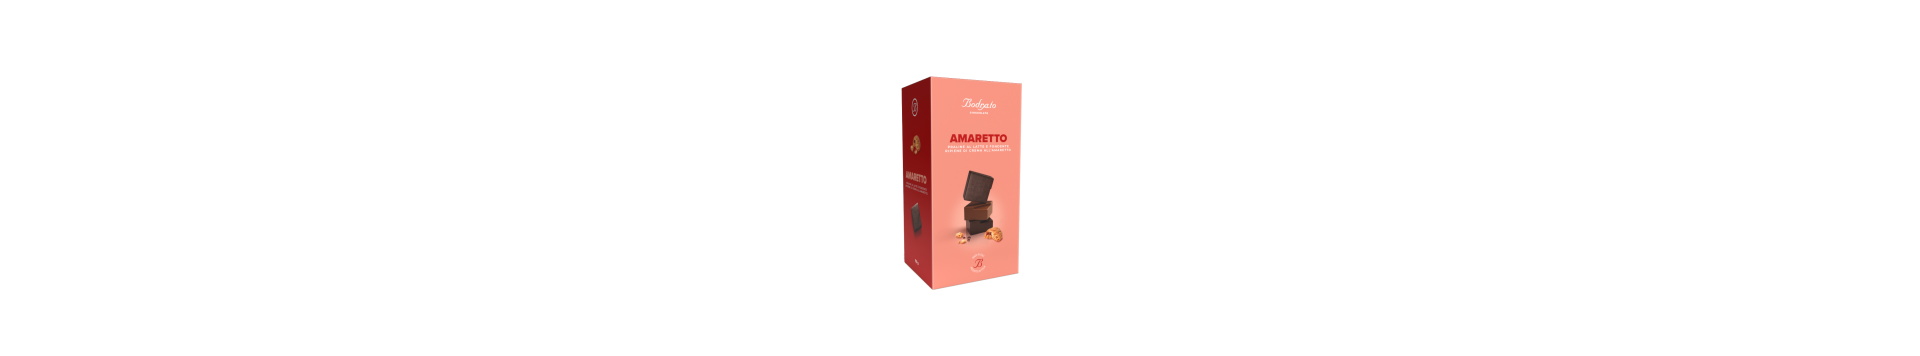 BOX OF AMARETTO PRALINES 120g